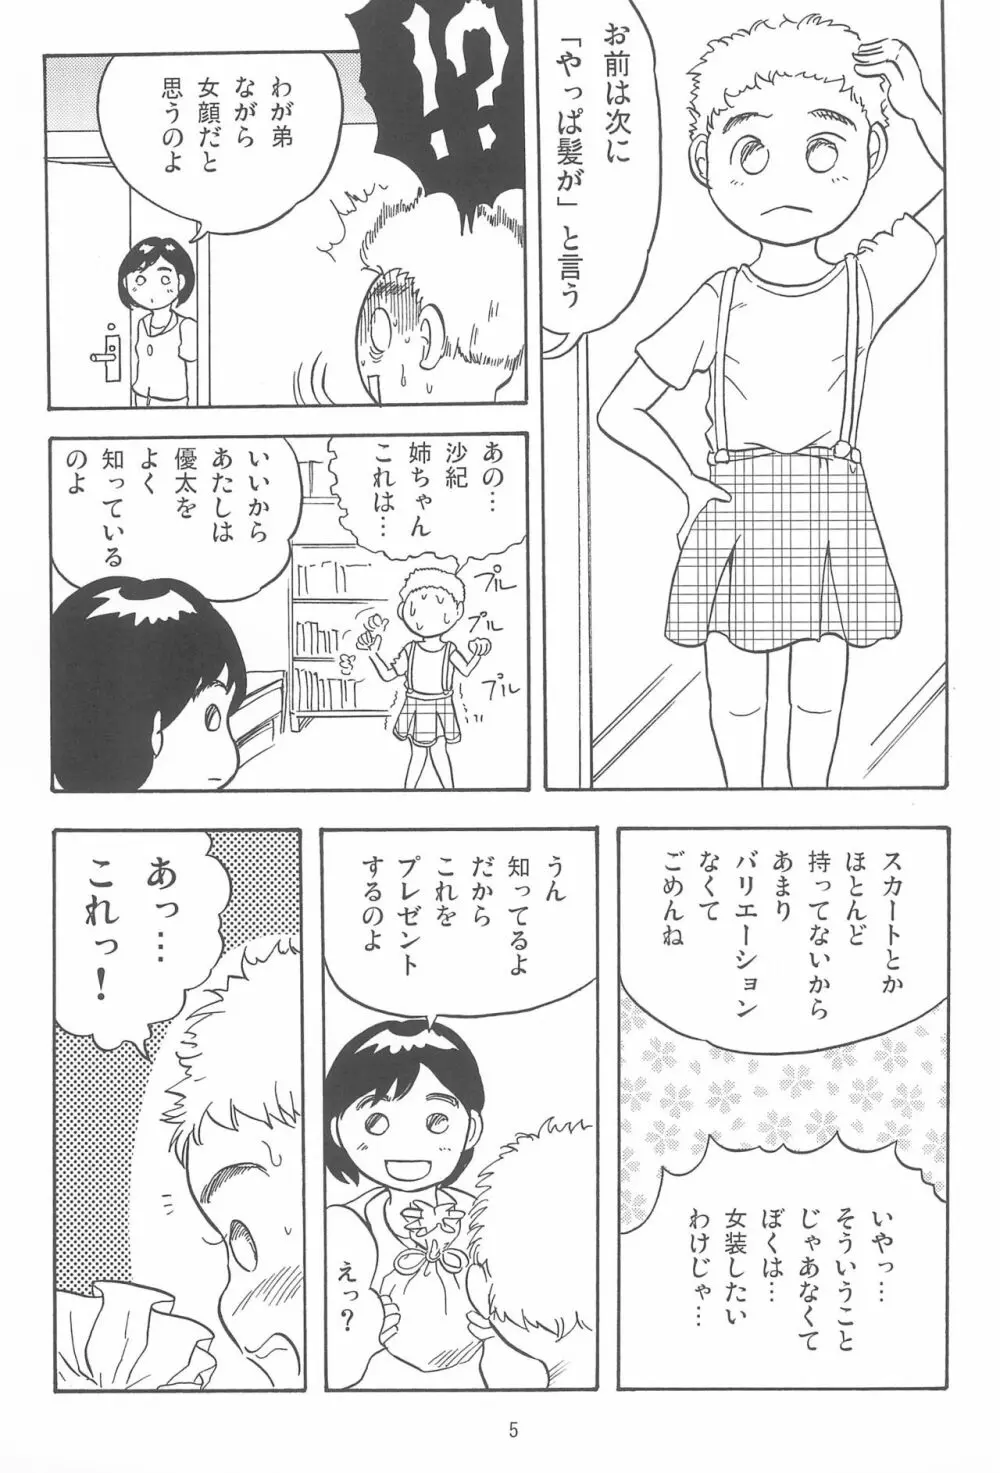 女子小学生日記10 - page5